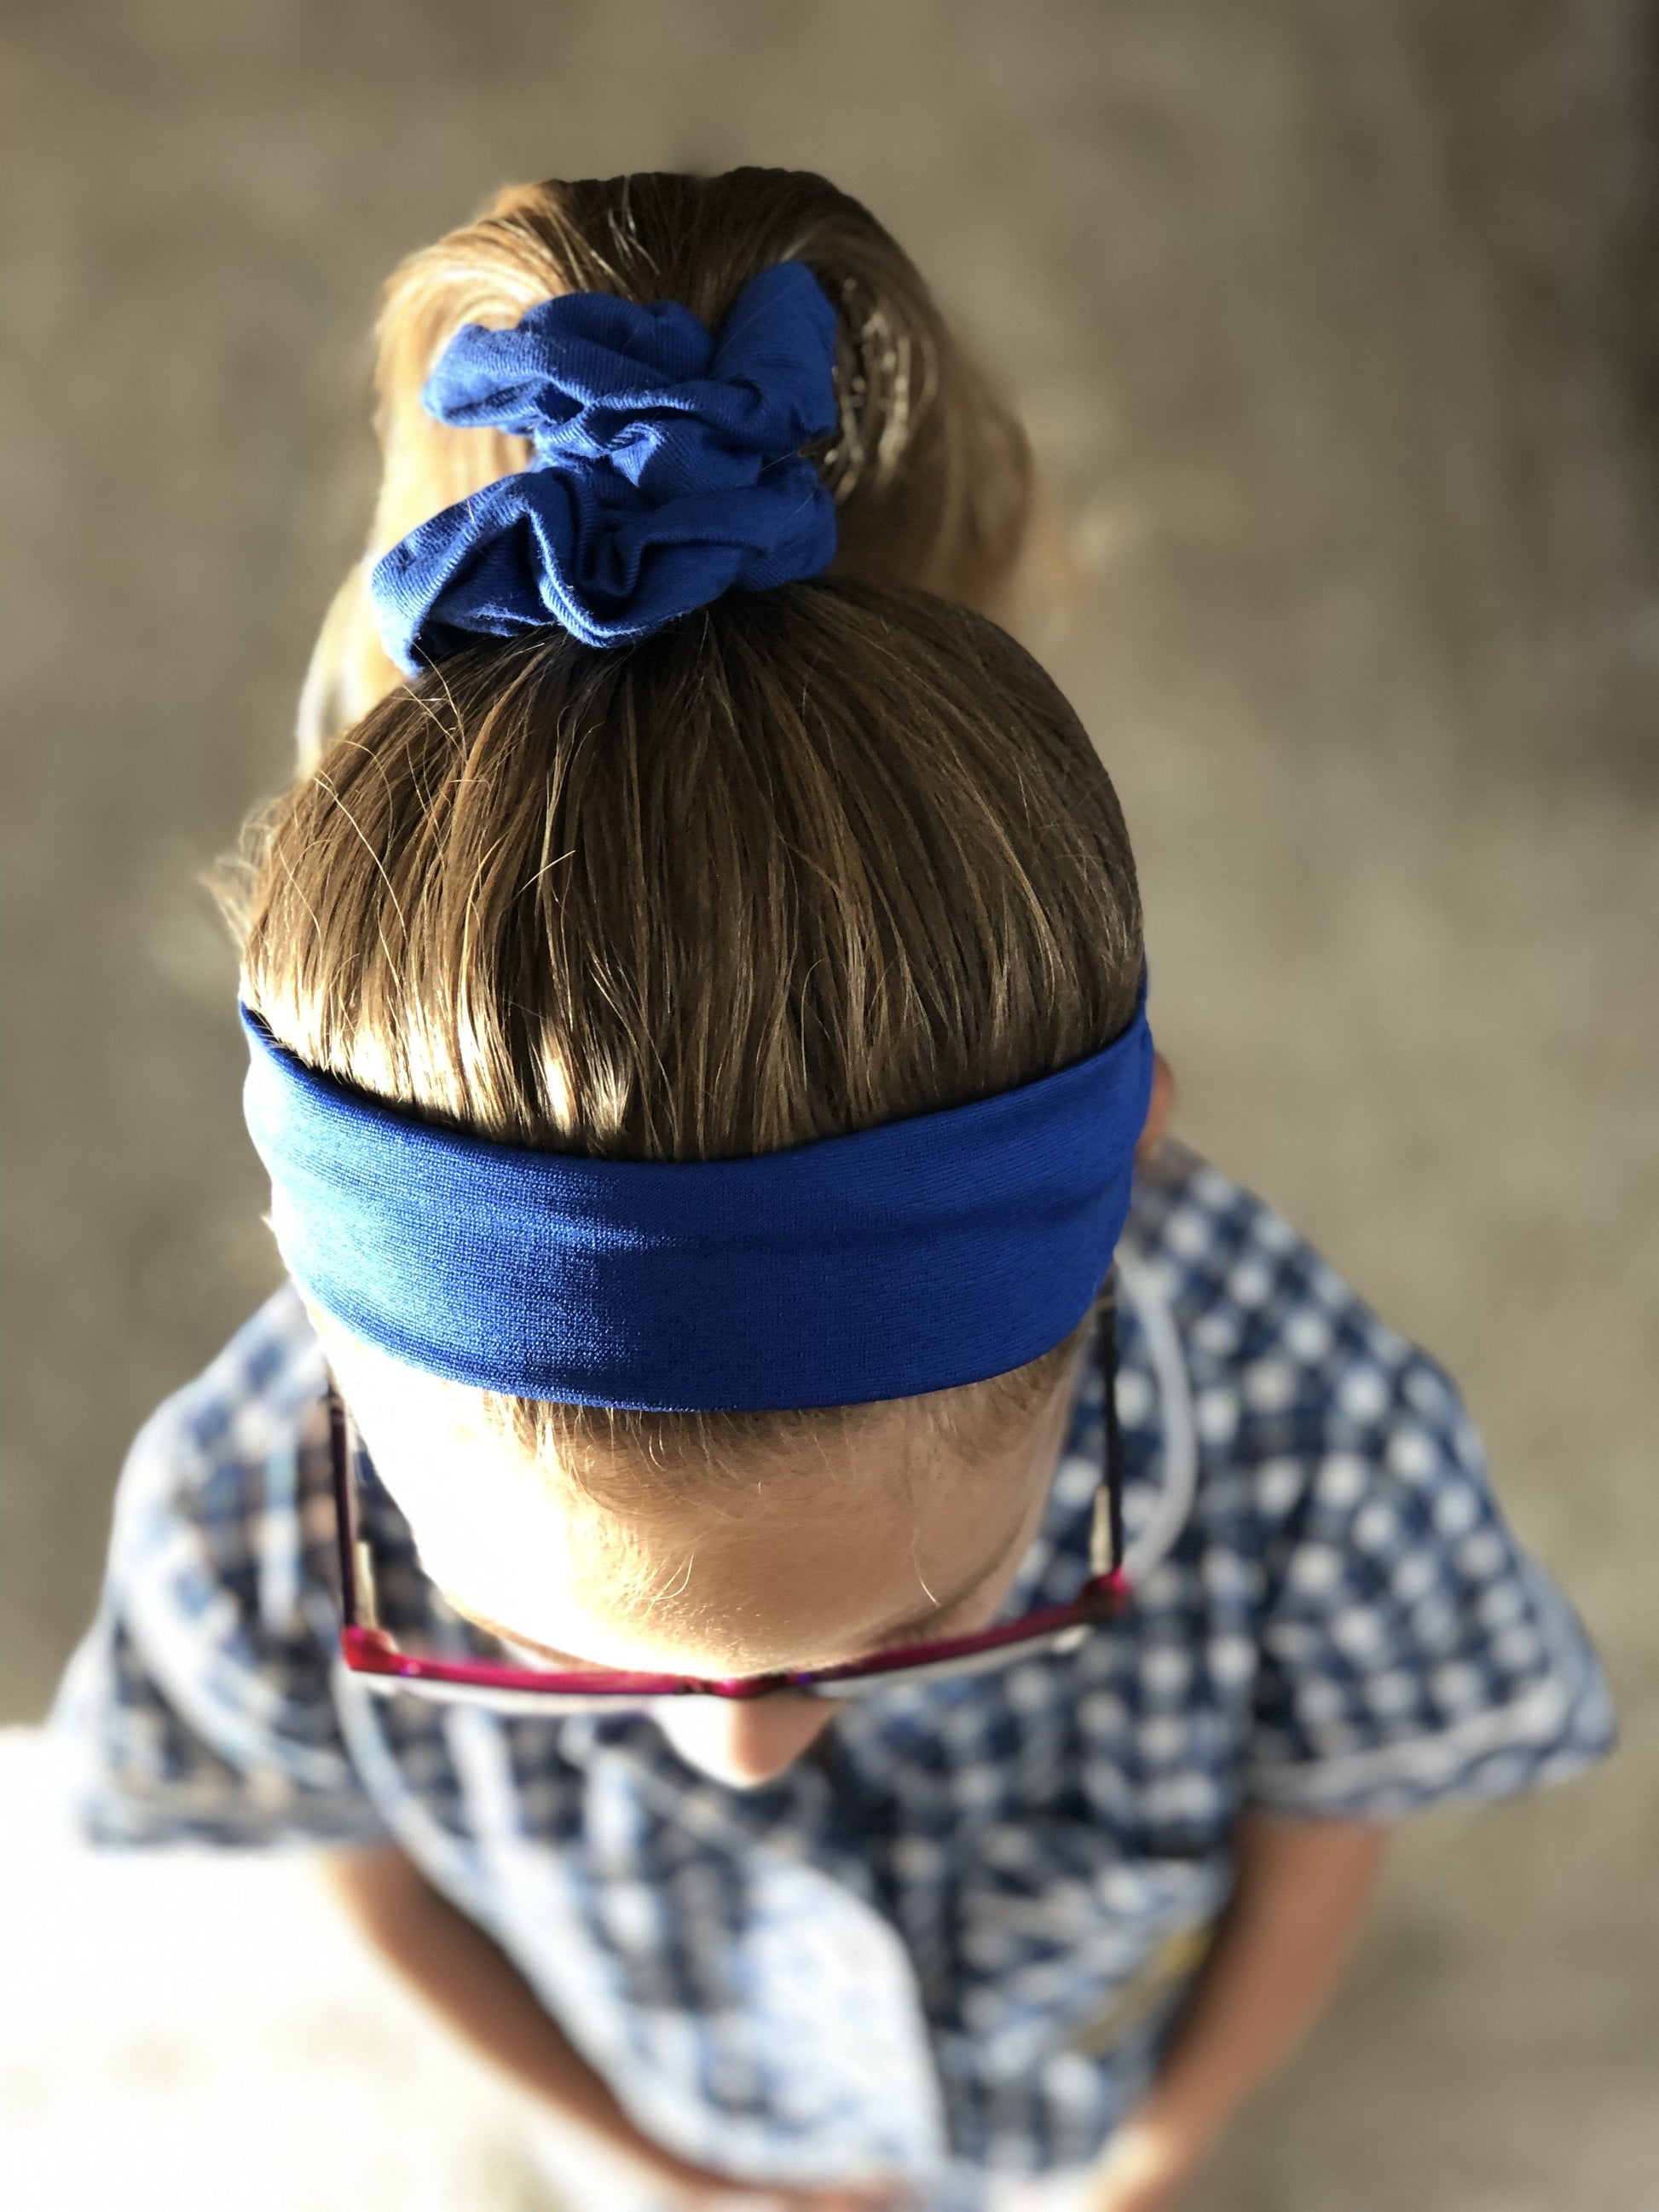 Stretch Headband for School, Sport, Yoga - Headbands - School Uniform Hair Accessories - Ponytails and Fairytales